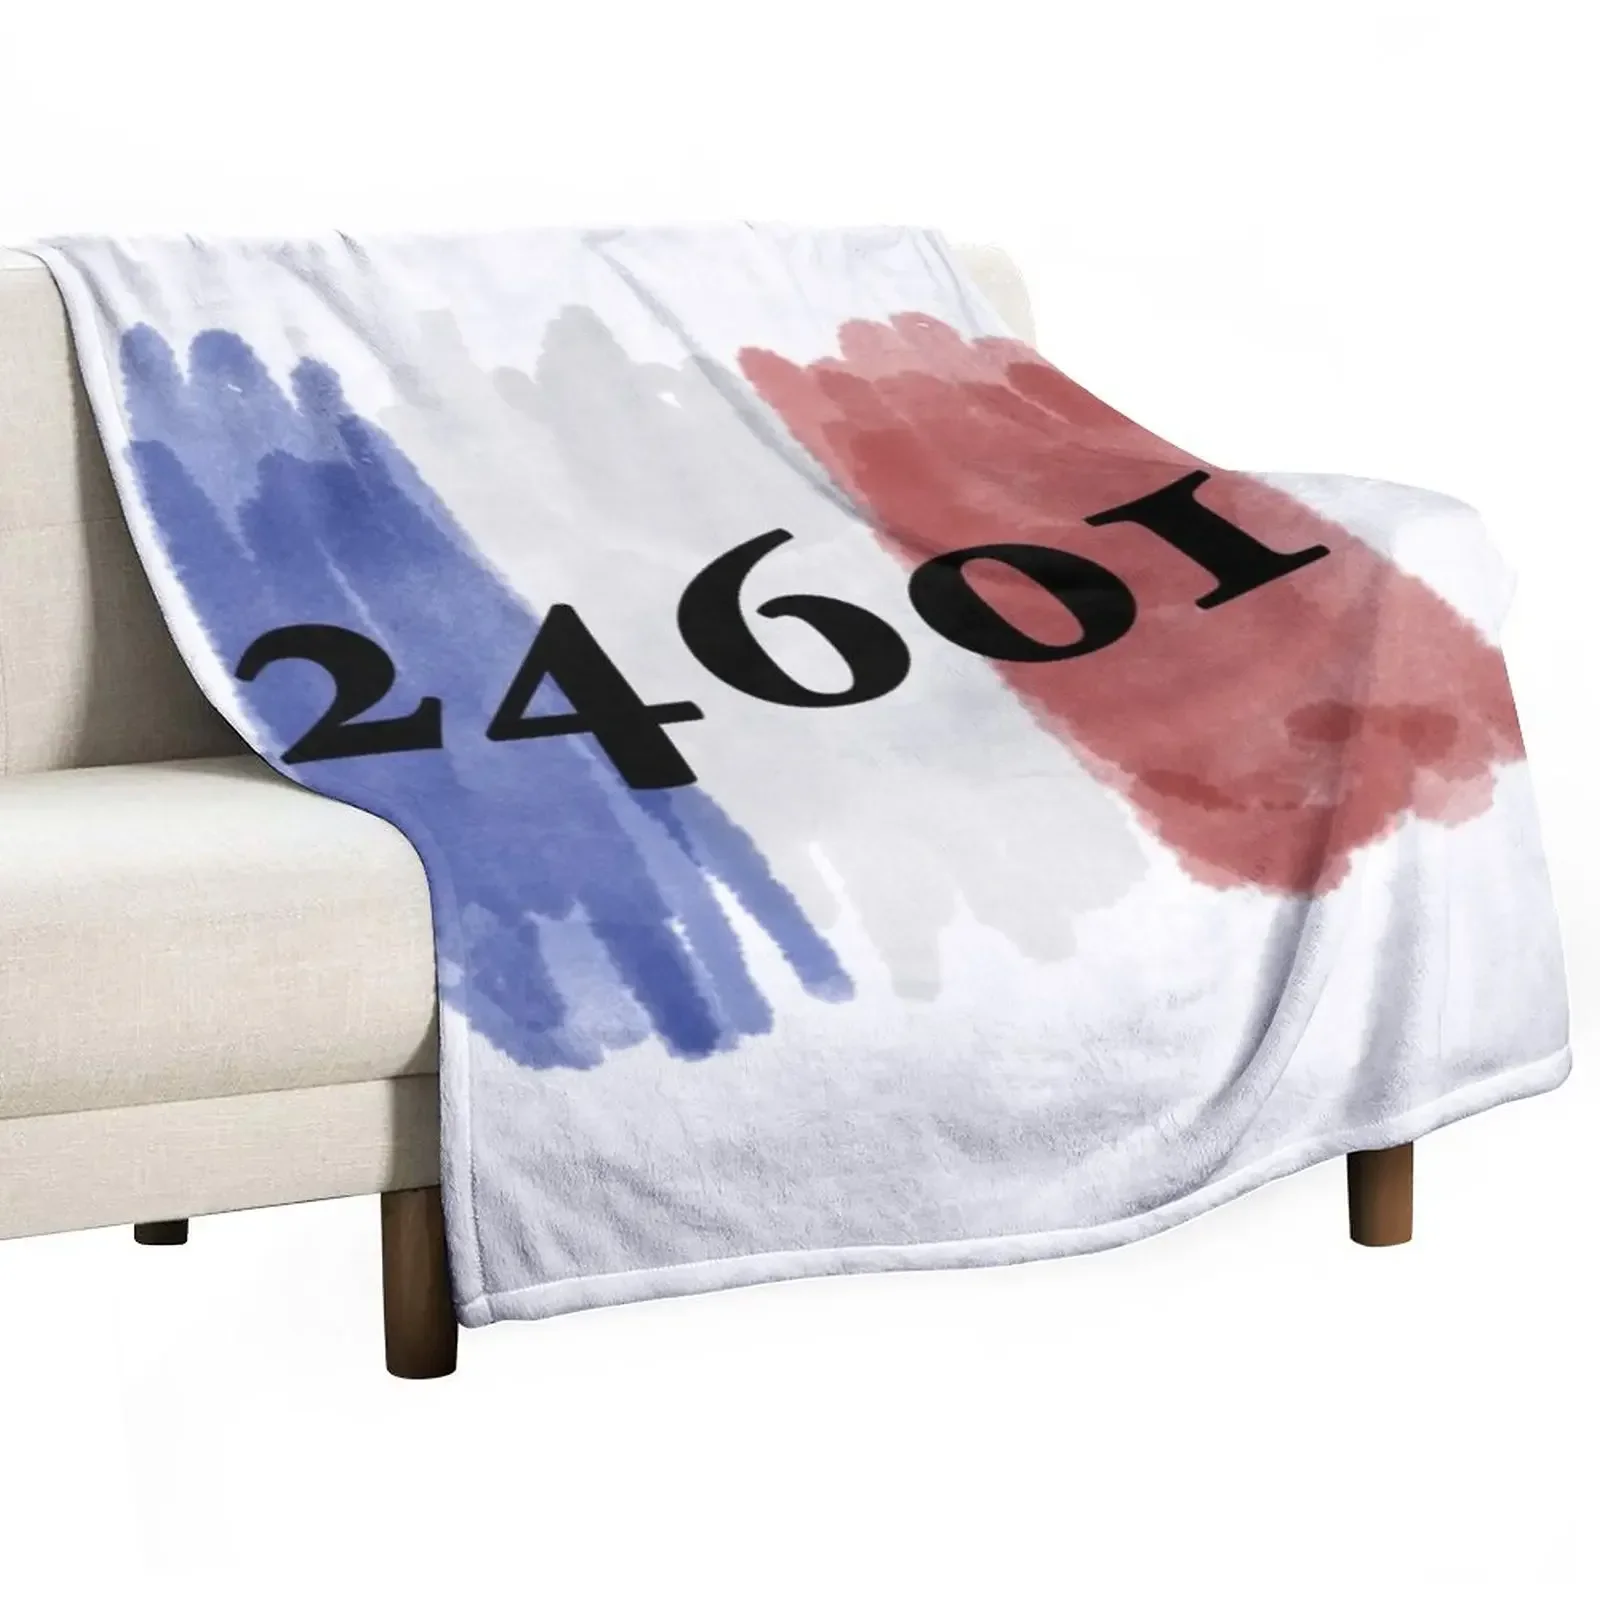 

24601 Throw Blanket Soft Beds Fluffy Shaggy Summer Beddings Blankets